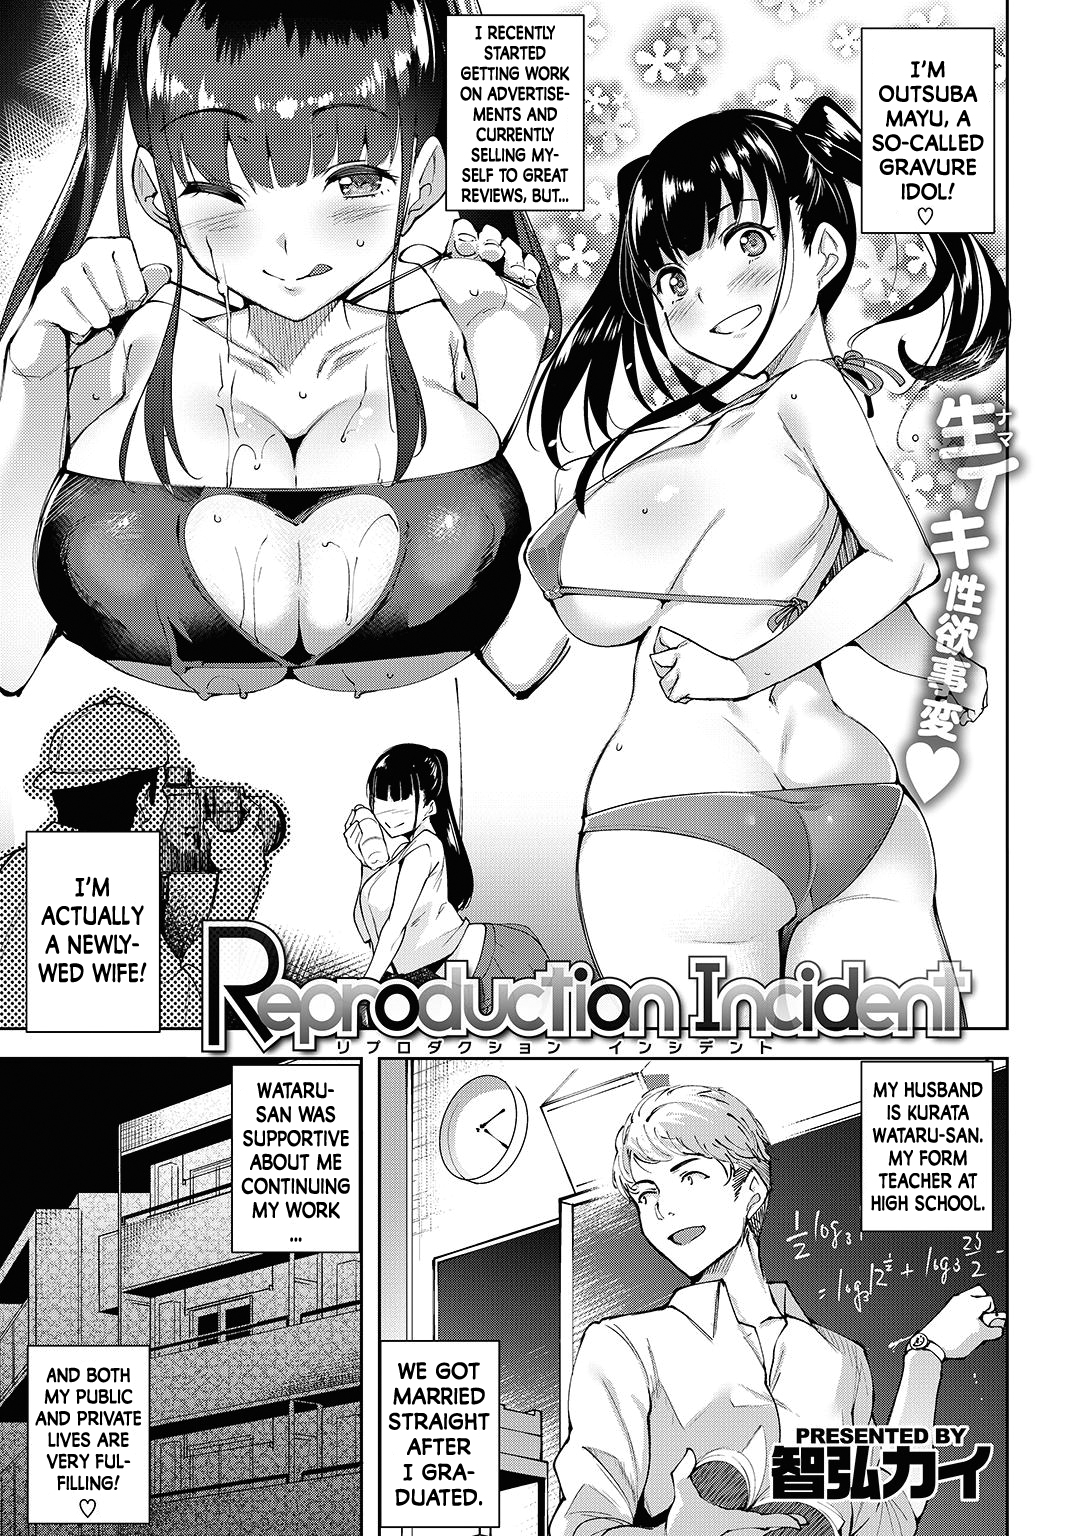 Tomohiro Kai Reproduction Incident Hentai Comic